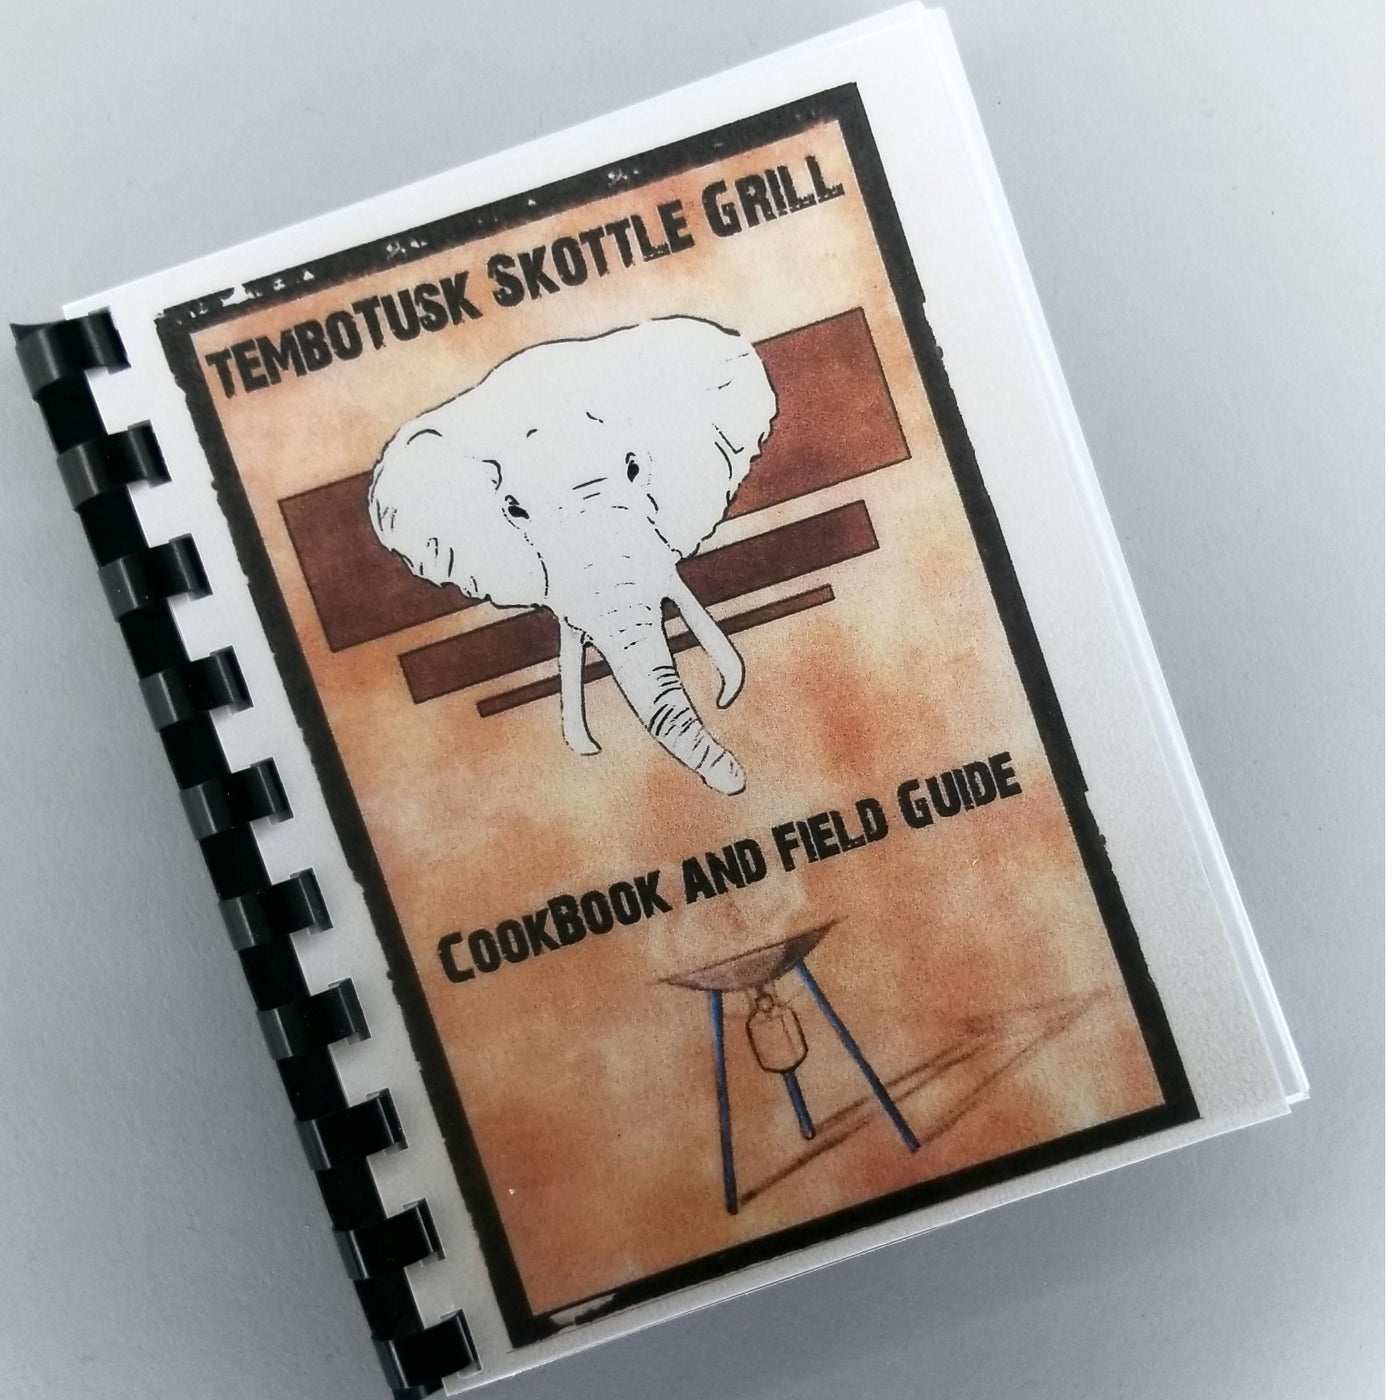 Skottle Grill Cookbook and Field Guide - Paperback Comb Binding TemboTusk